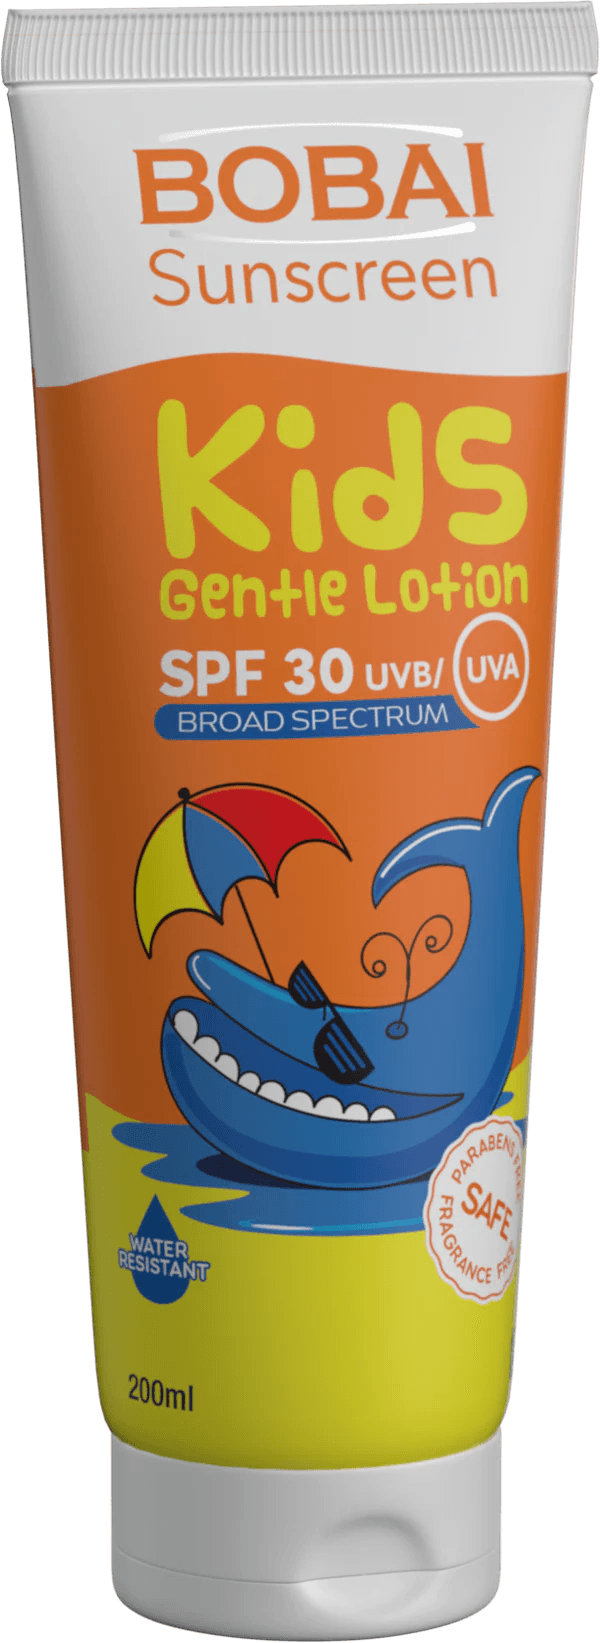 Bobai Sunscreen Kids SPF 30 lotion 200 ml - Ourkids - Bobai